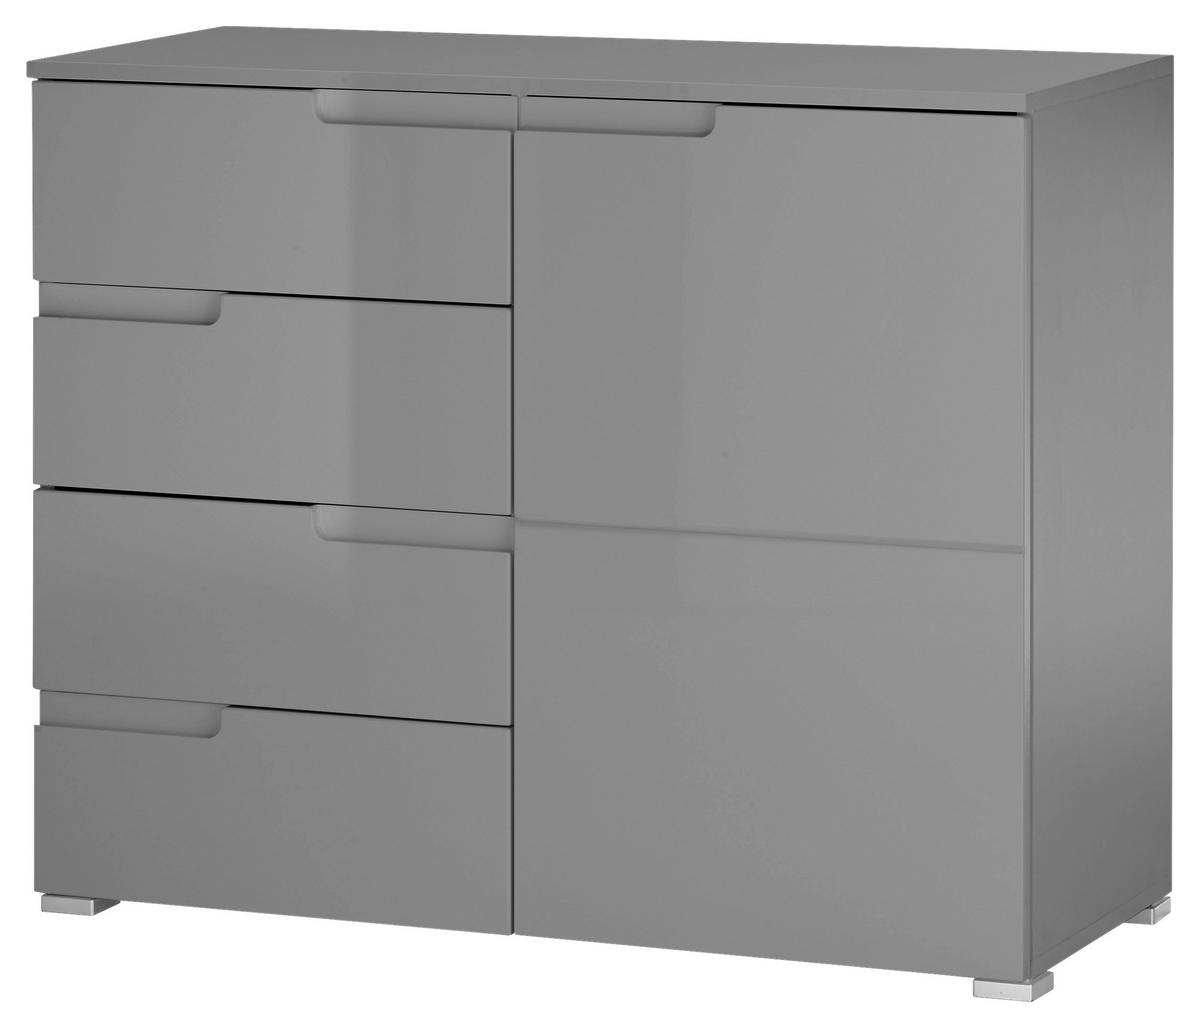 KOMMODE 100/80/40 cm  - Silberfarben/Grau, Basics, Holzwerkstoff/Kunststoff (100/80/40cm)